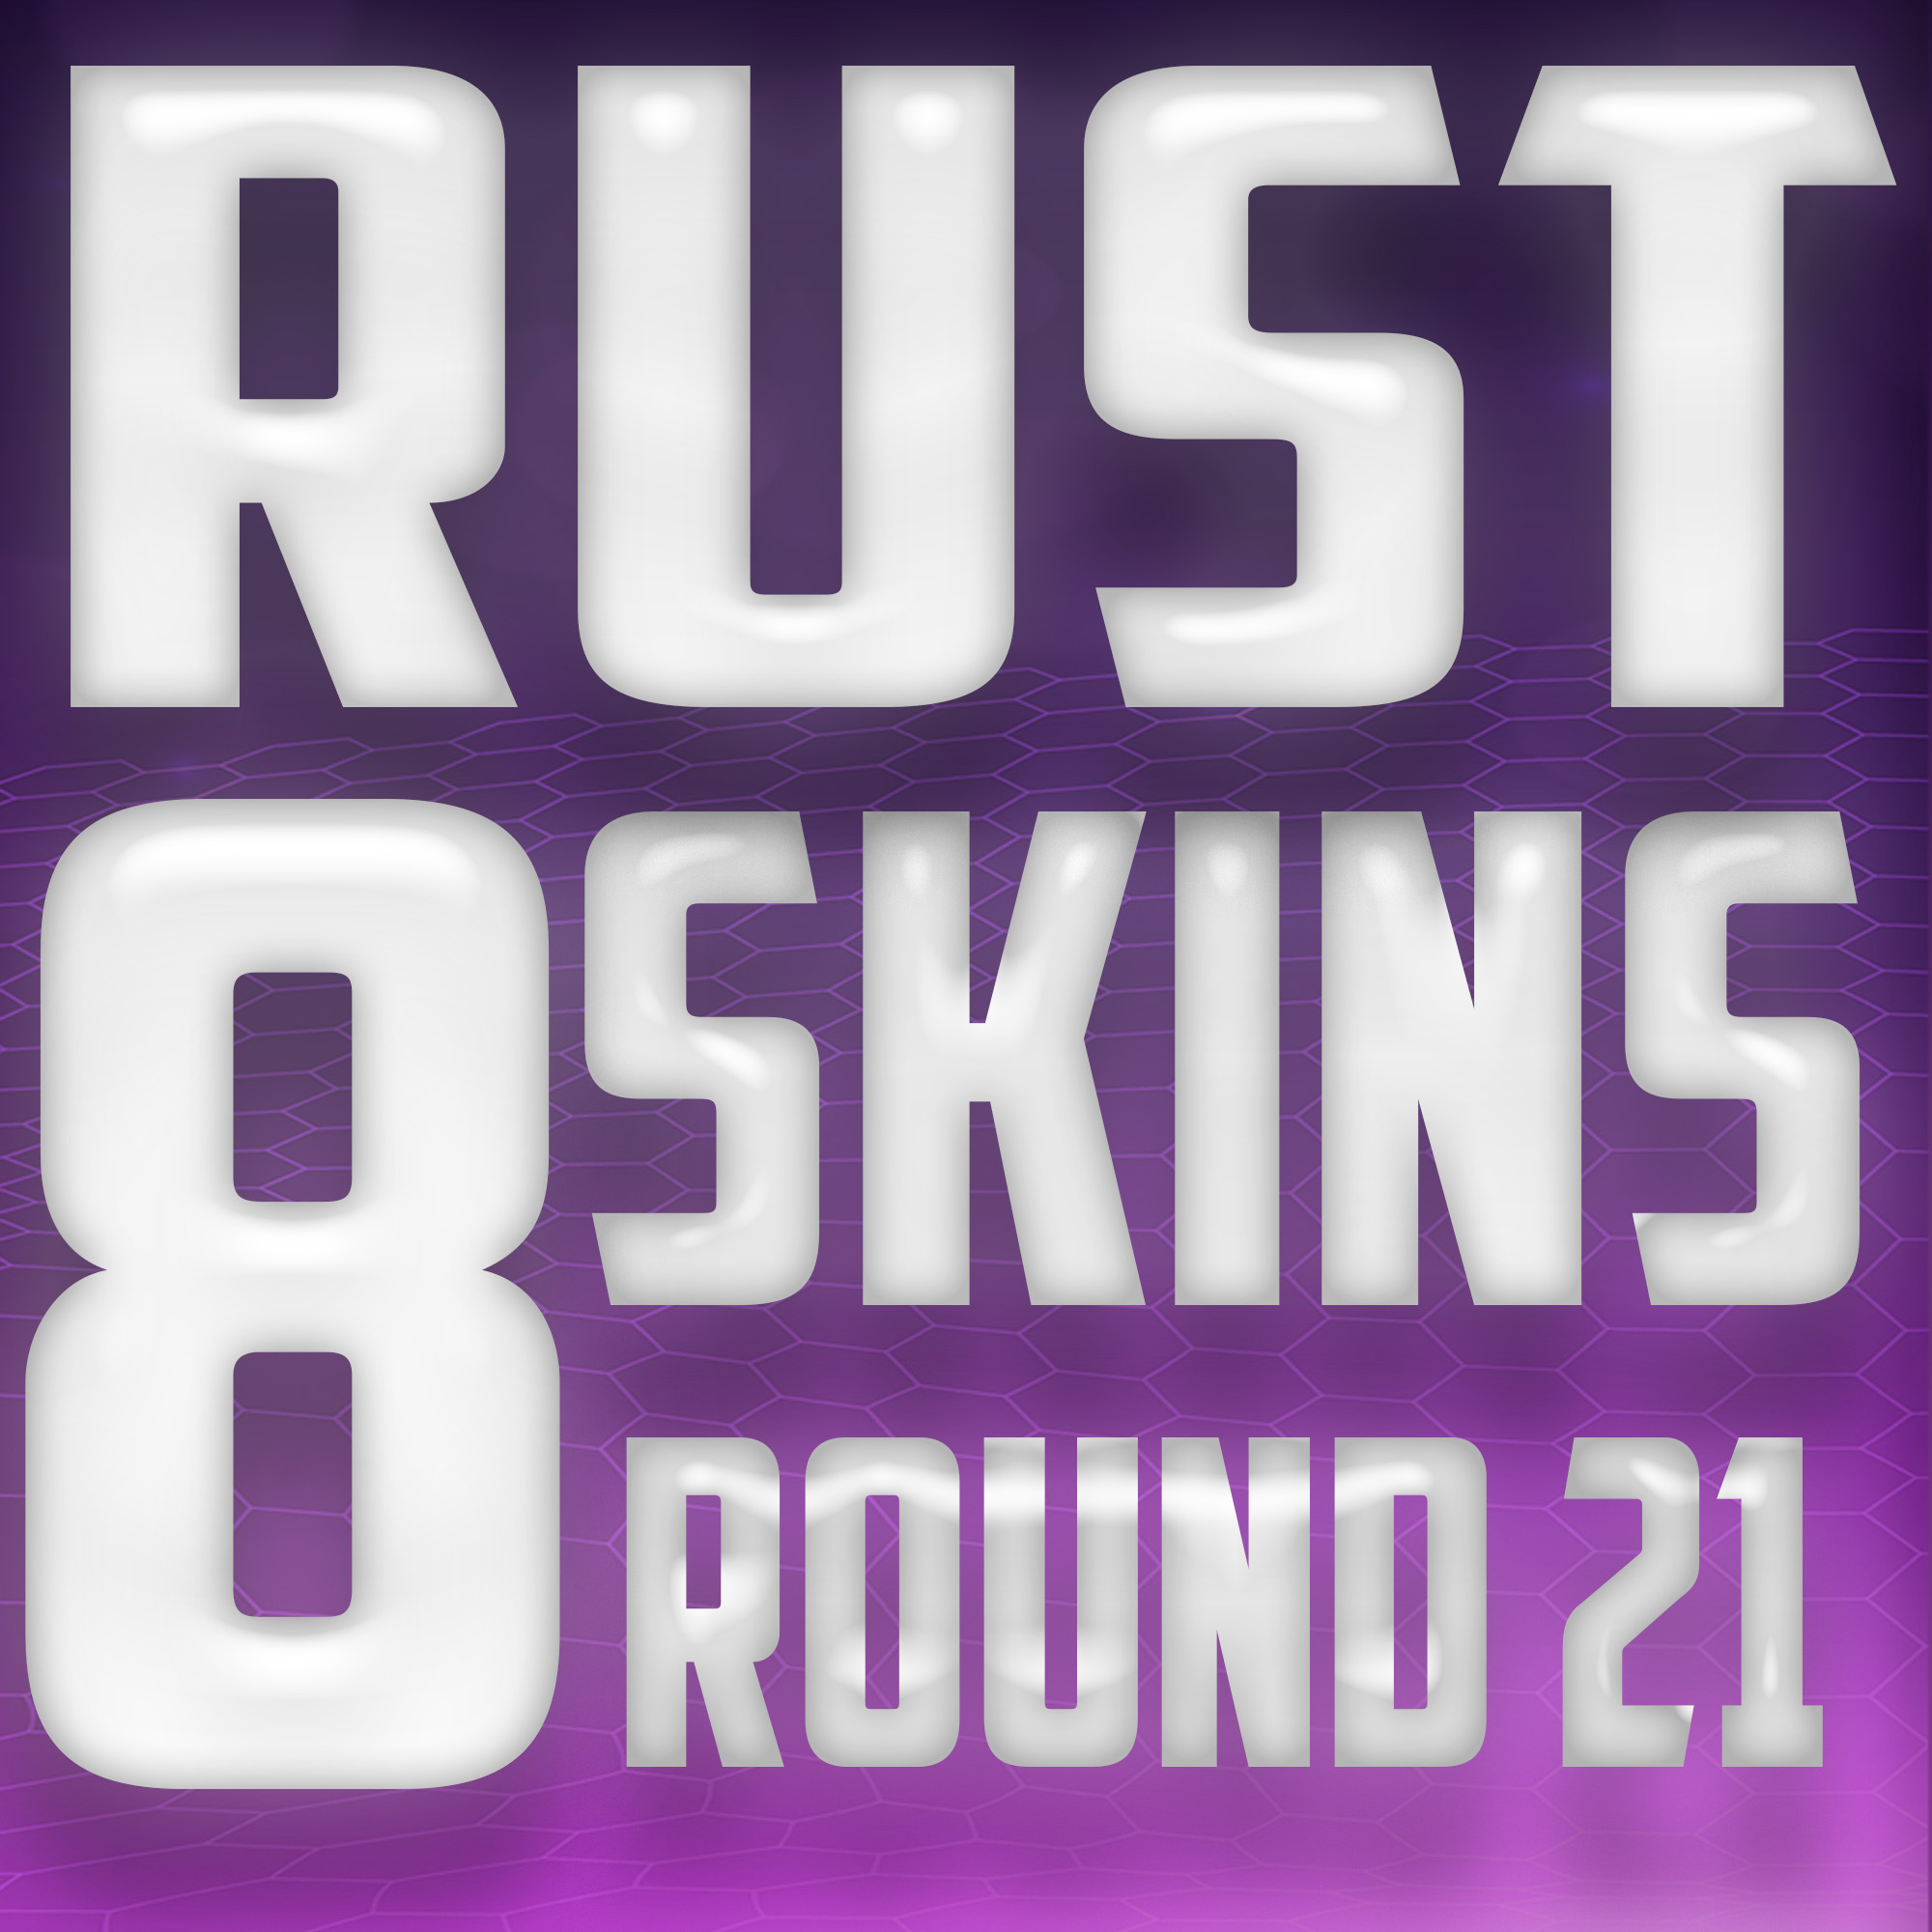 Rust twitch drops round 12 когда фото 118